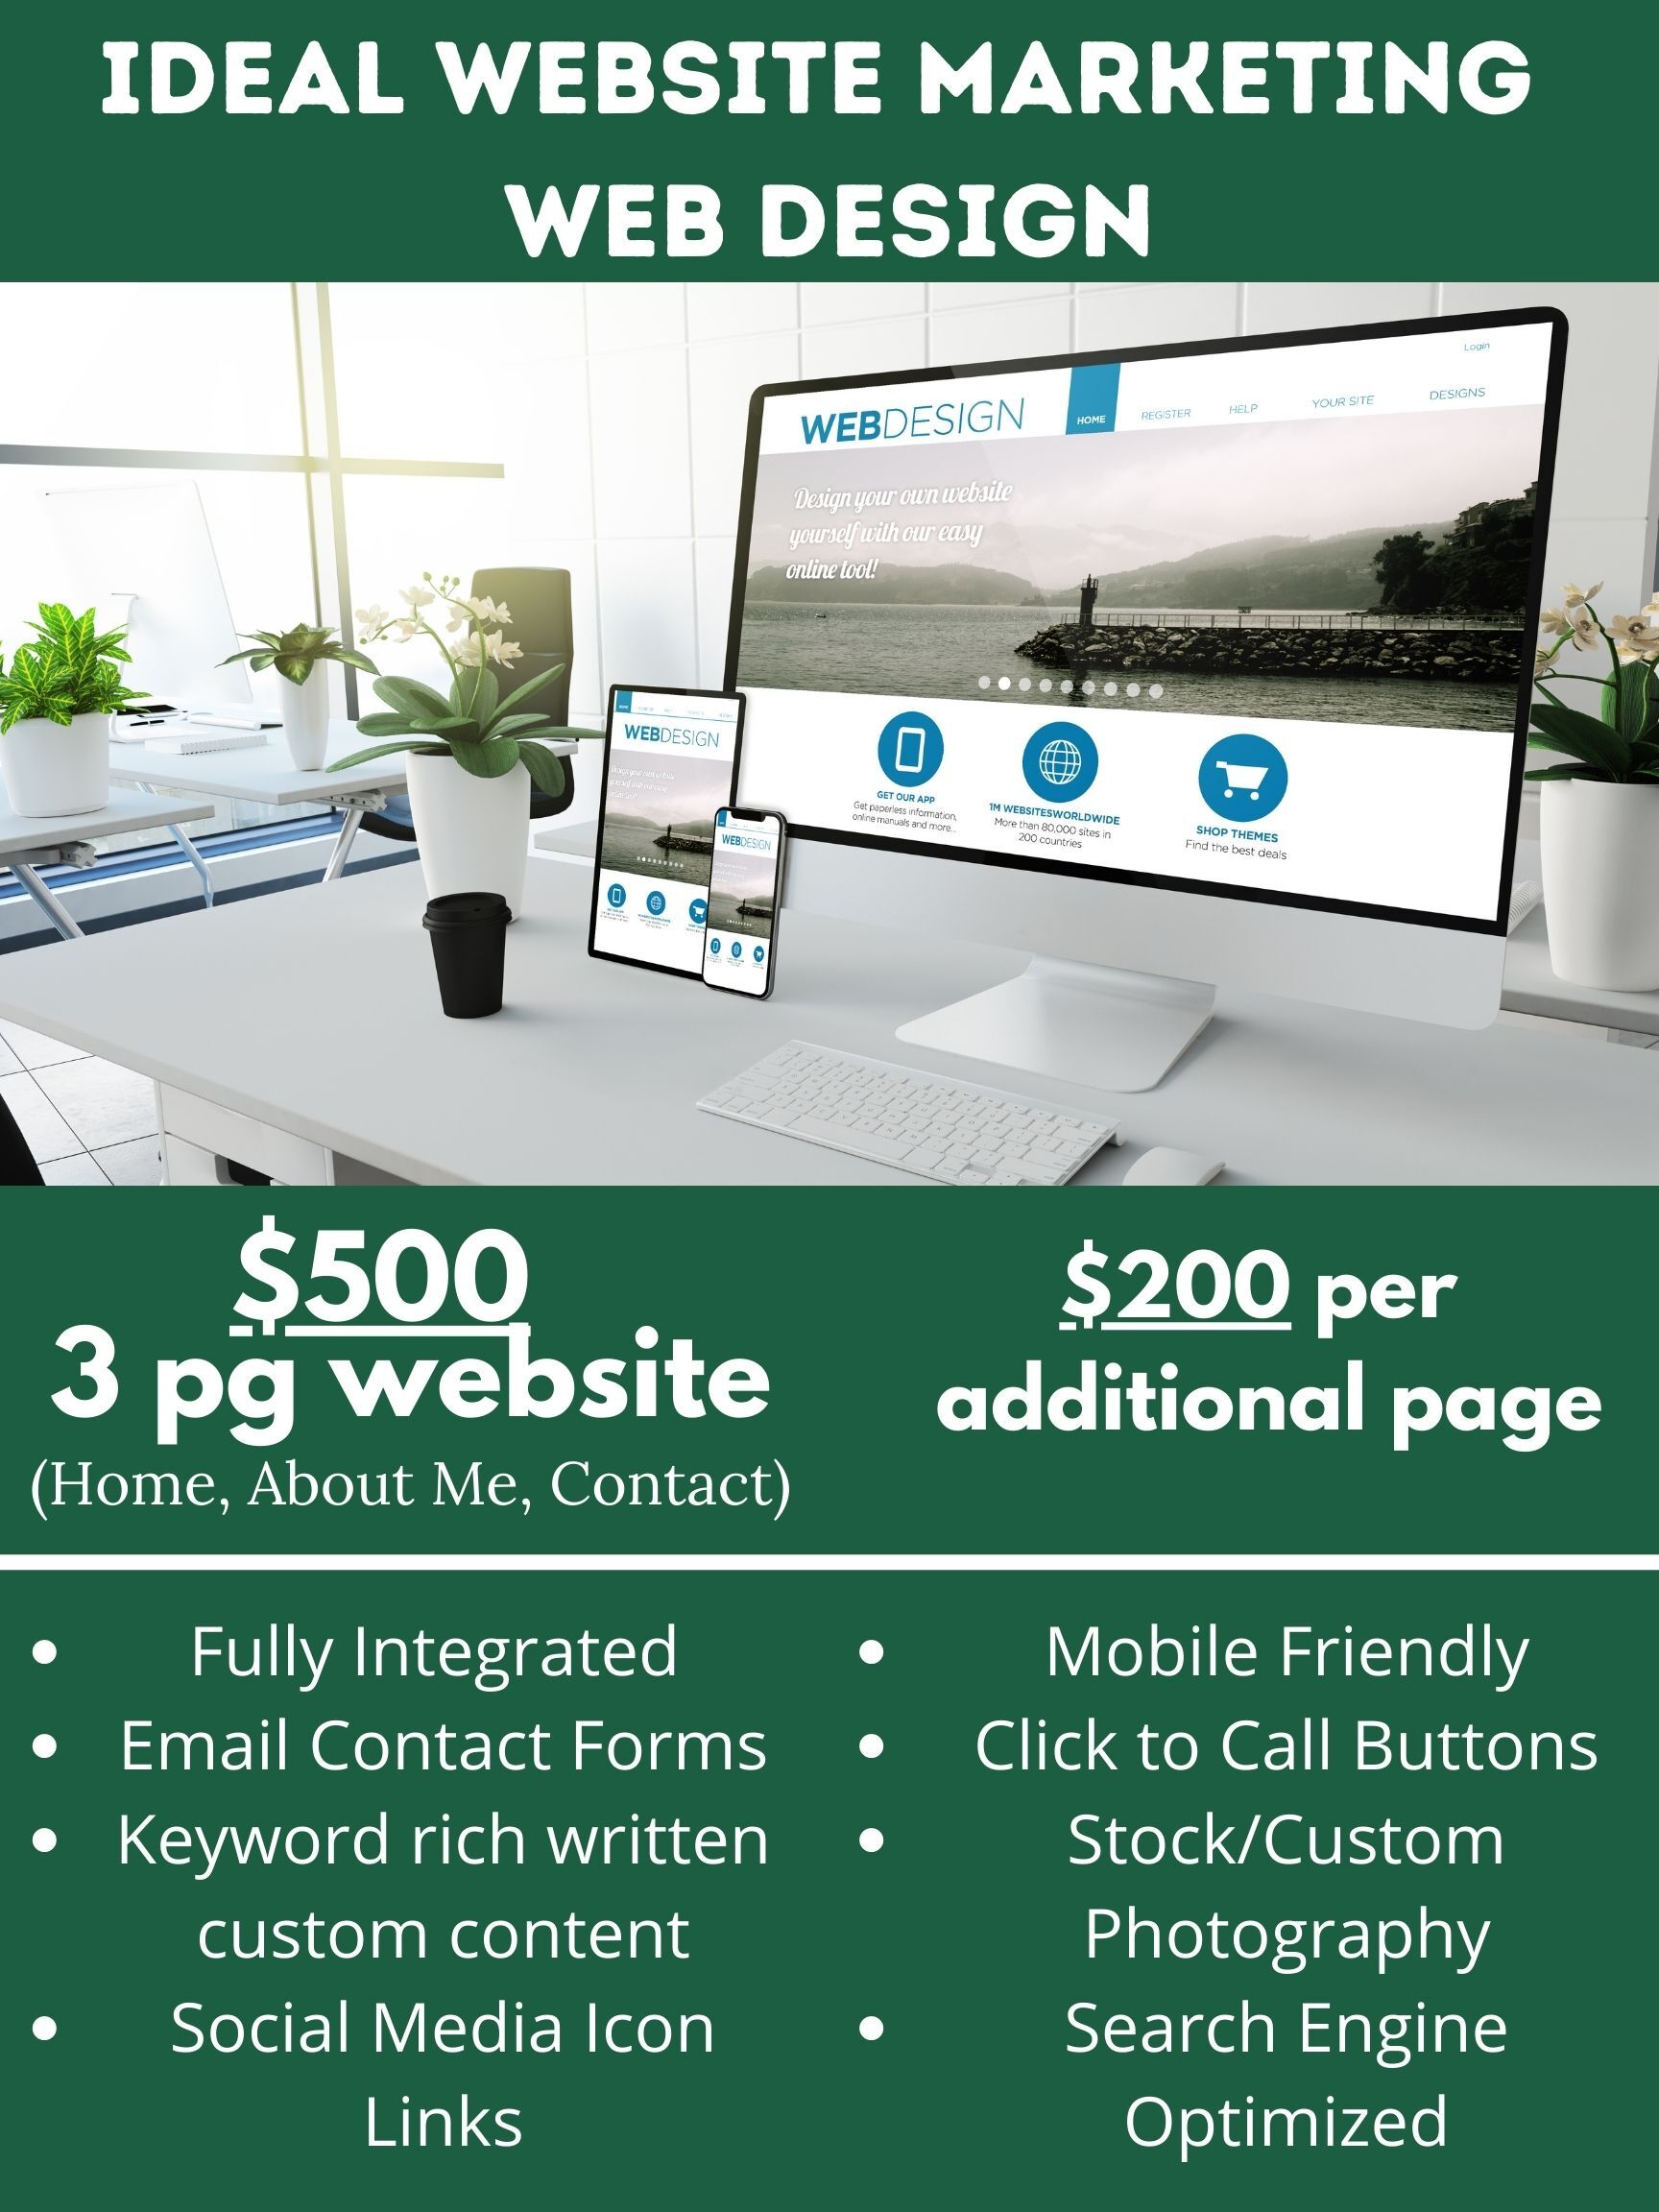 Ideal Website Marketing web design service